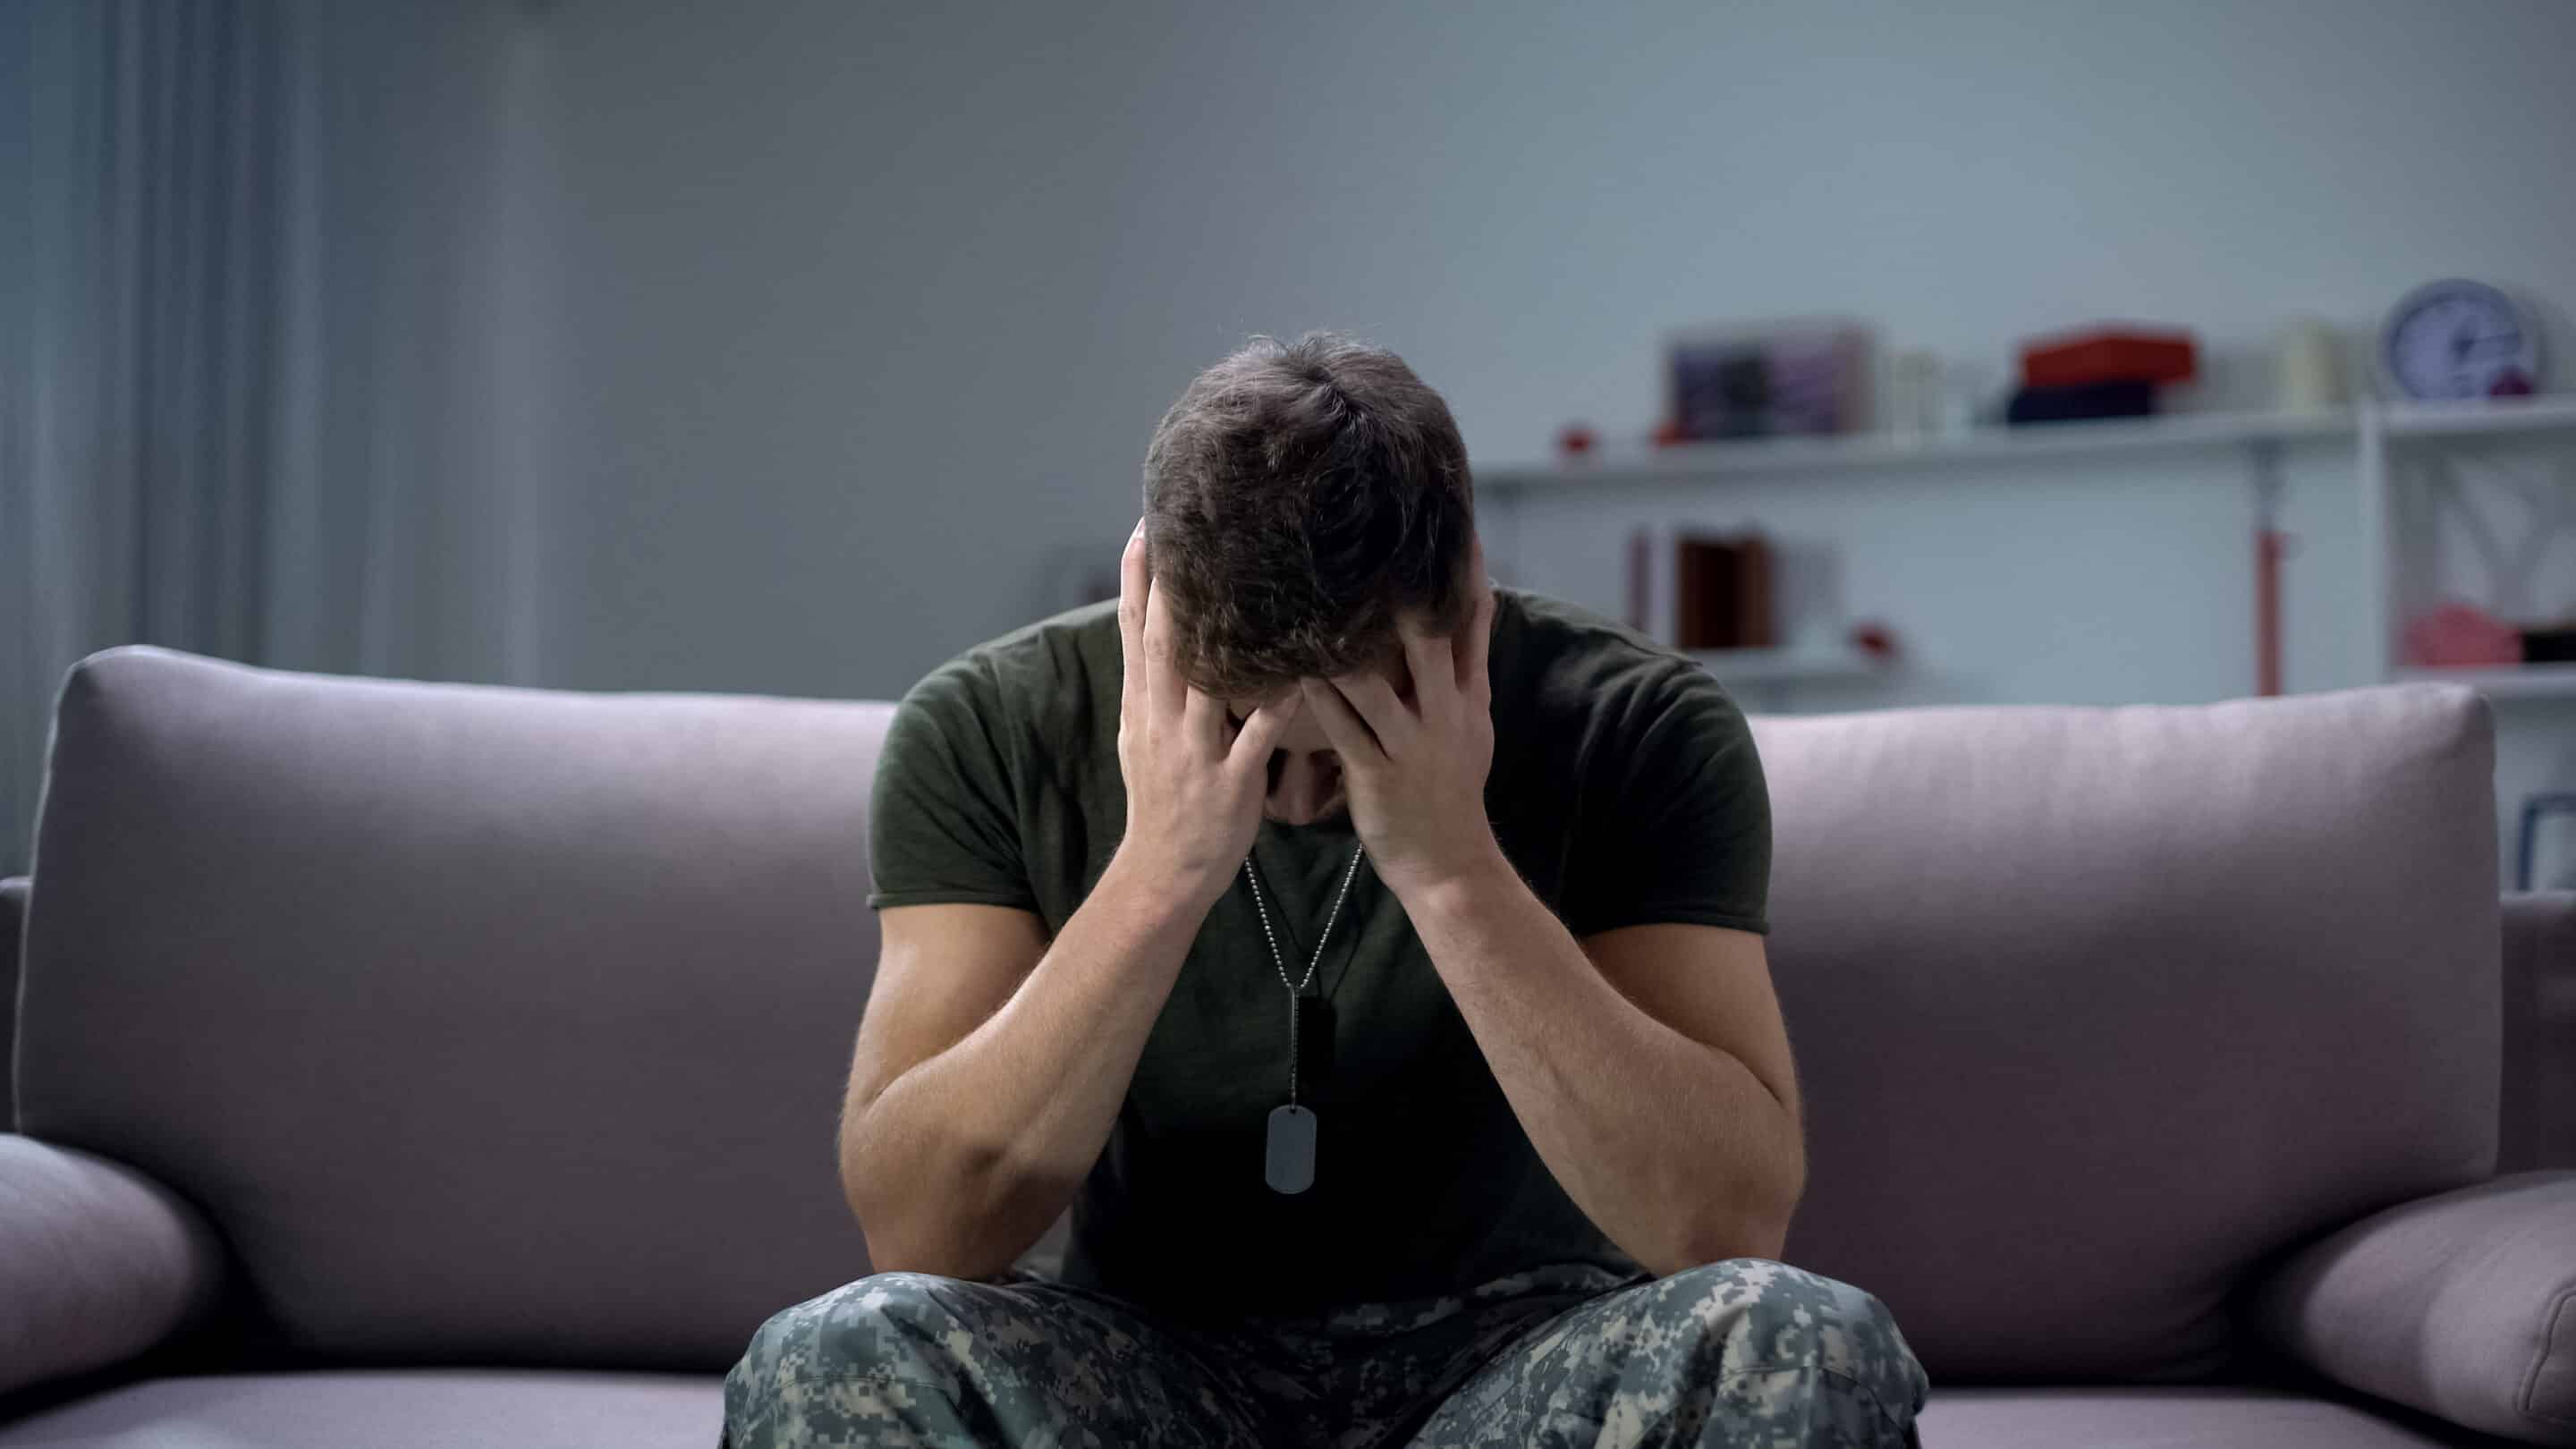 PTSD and Substance Abuse Statistics